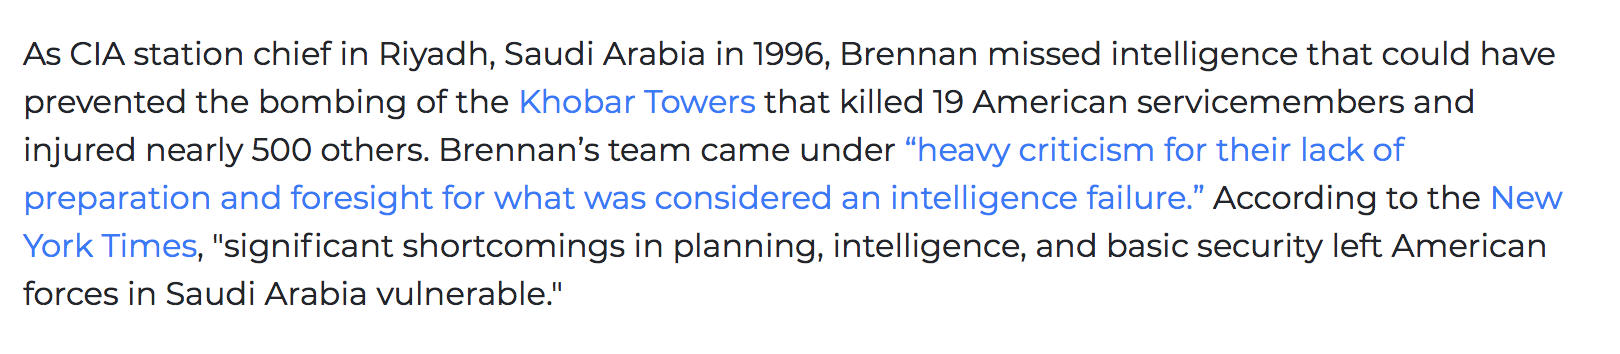 Brennan under heavy criticism for Khobar Towers